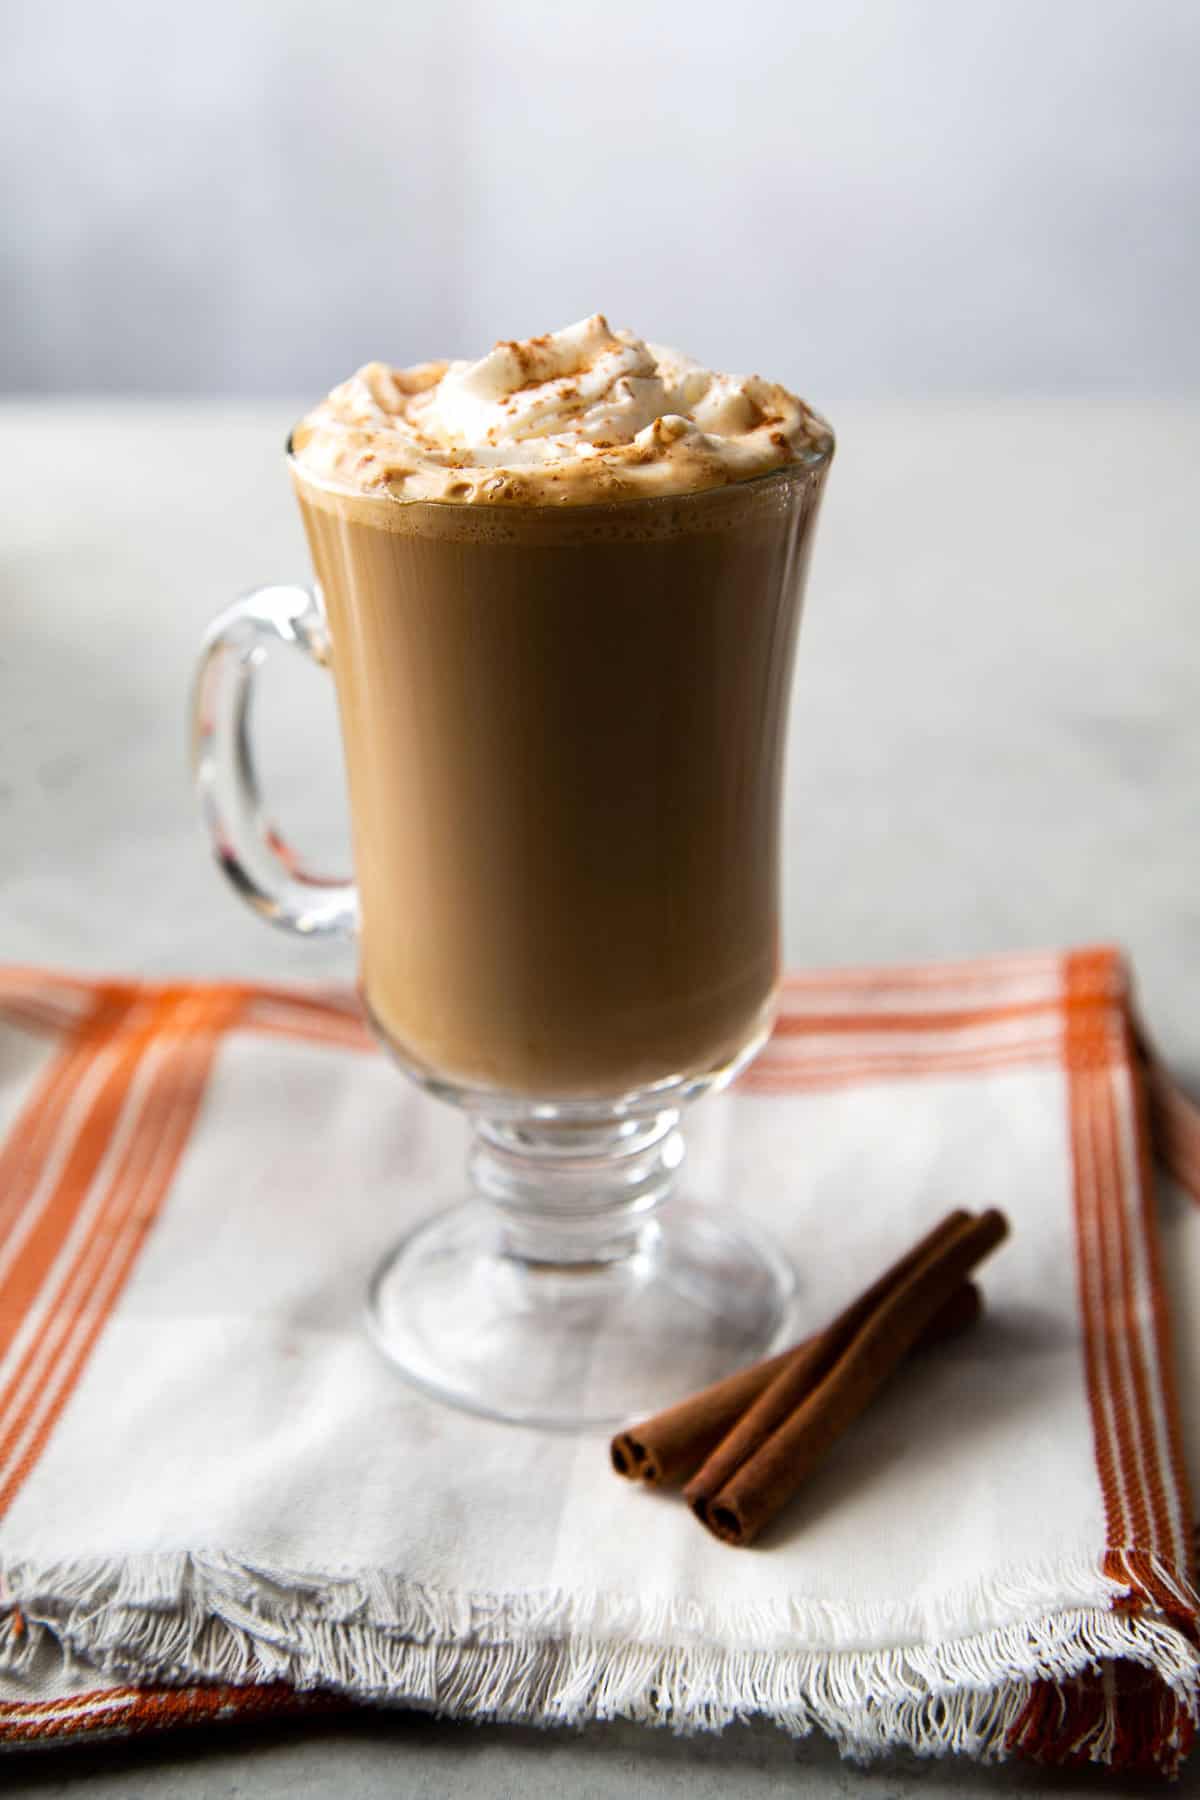 https://www.thelittleepicurean.com/wp-content/uploads/2021/11/cinnamon-syrup-latte.jpg